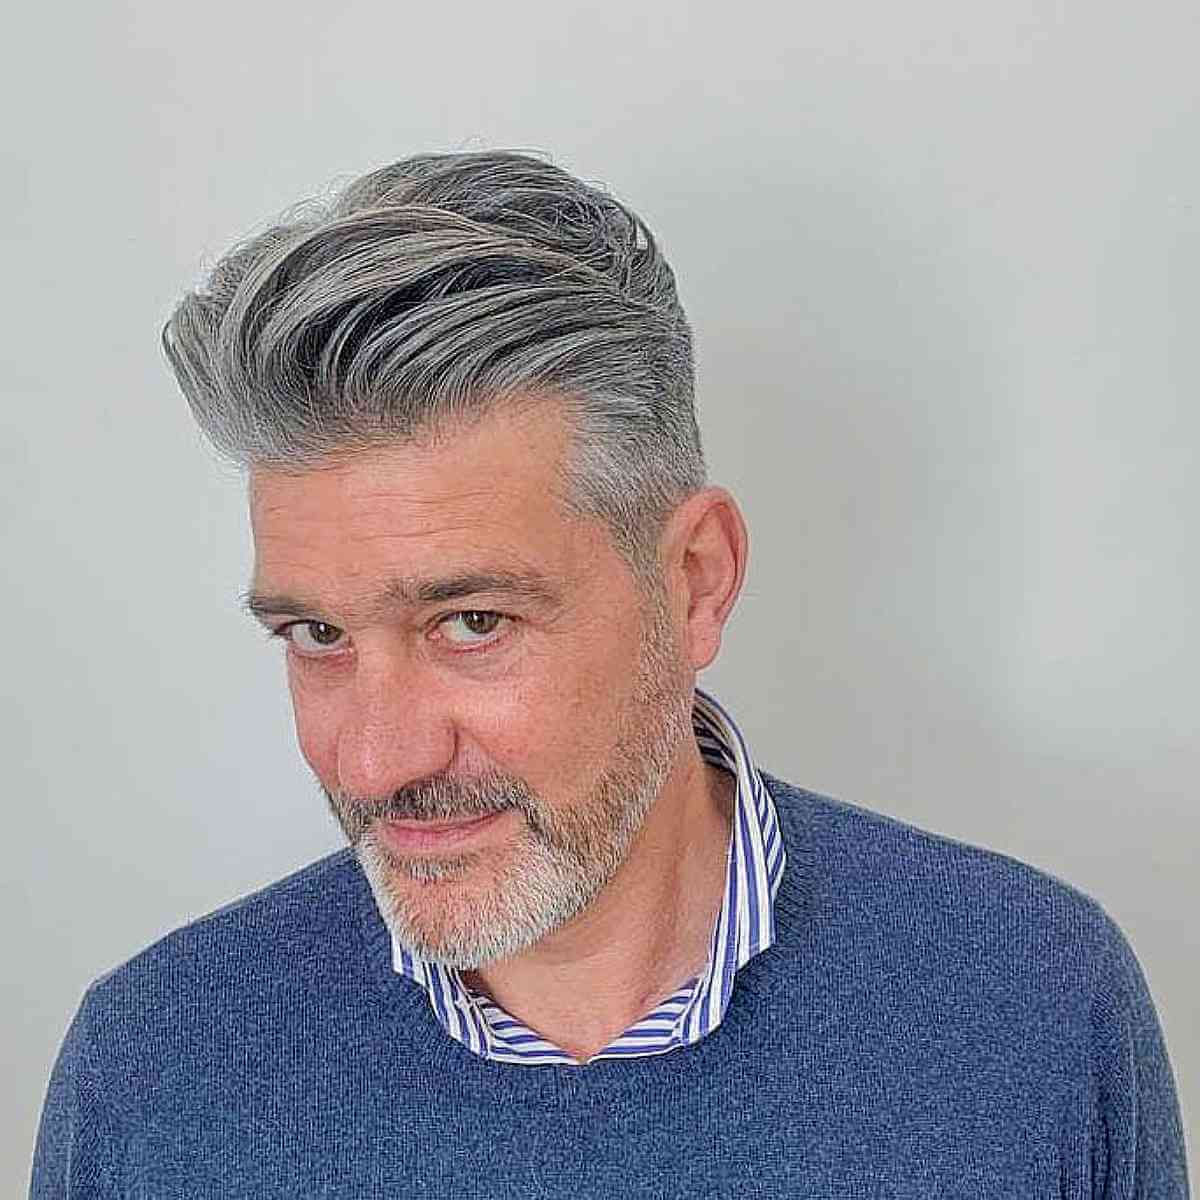 Textured crop haircut for older men